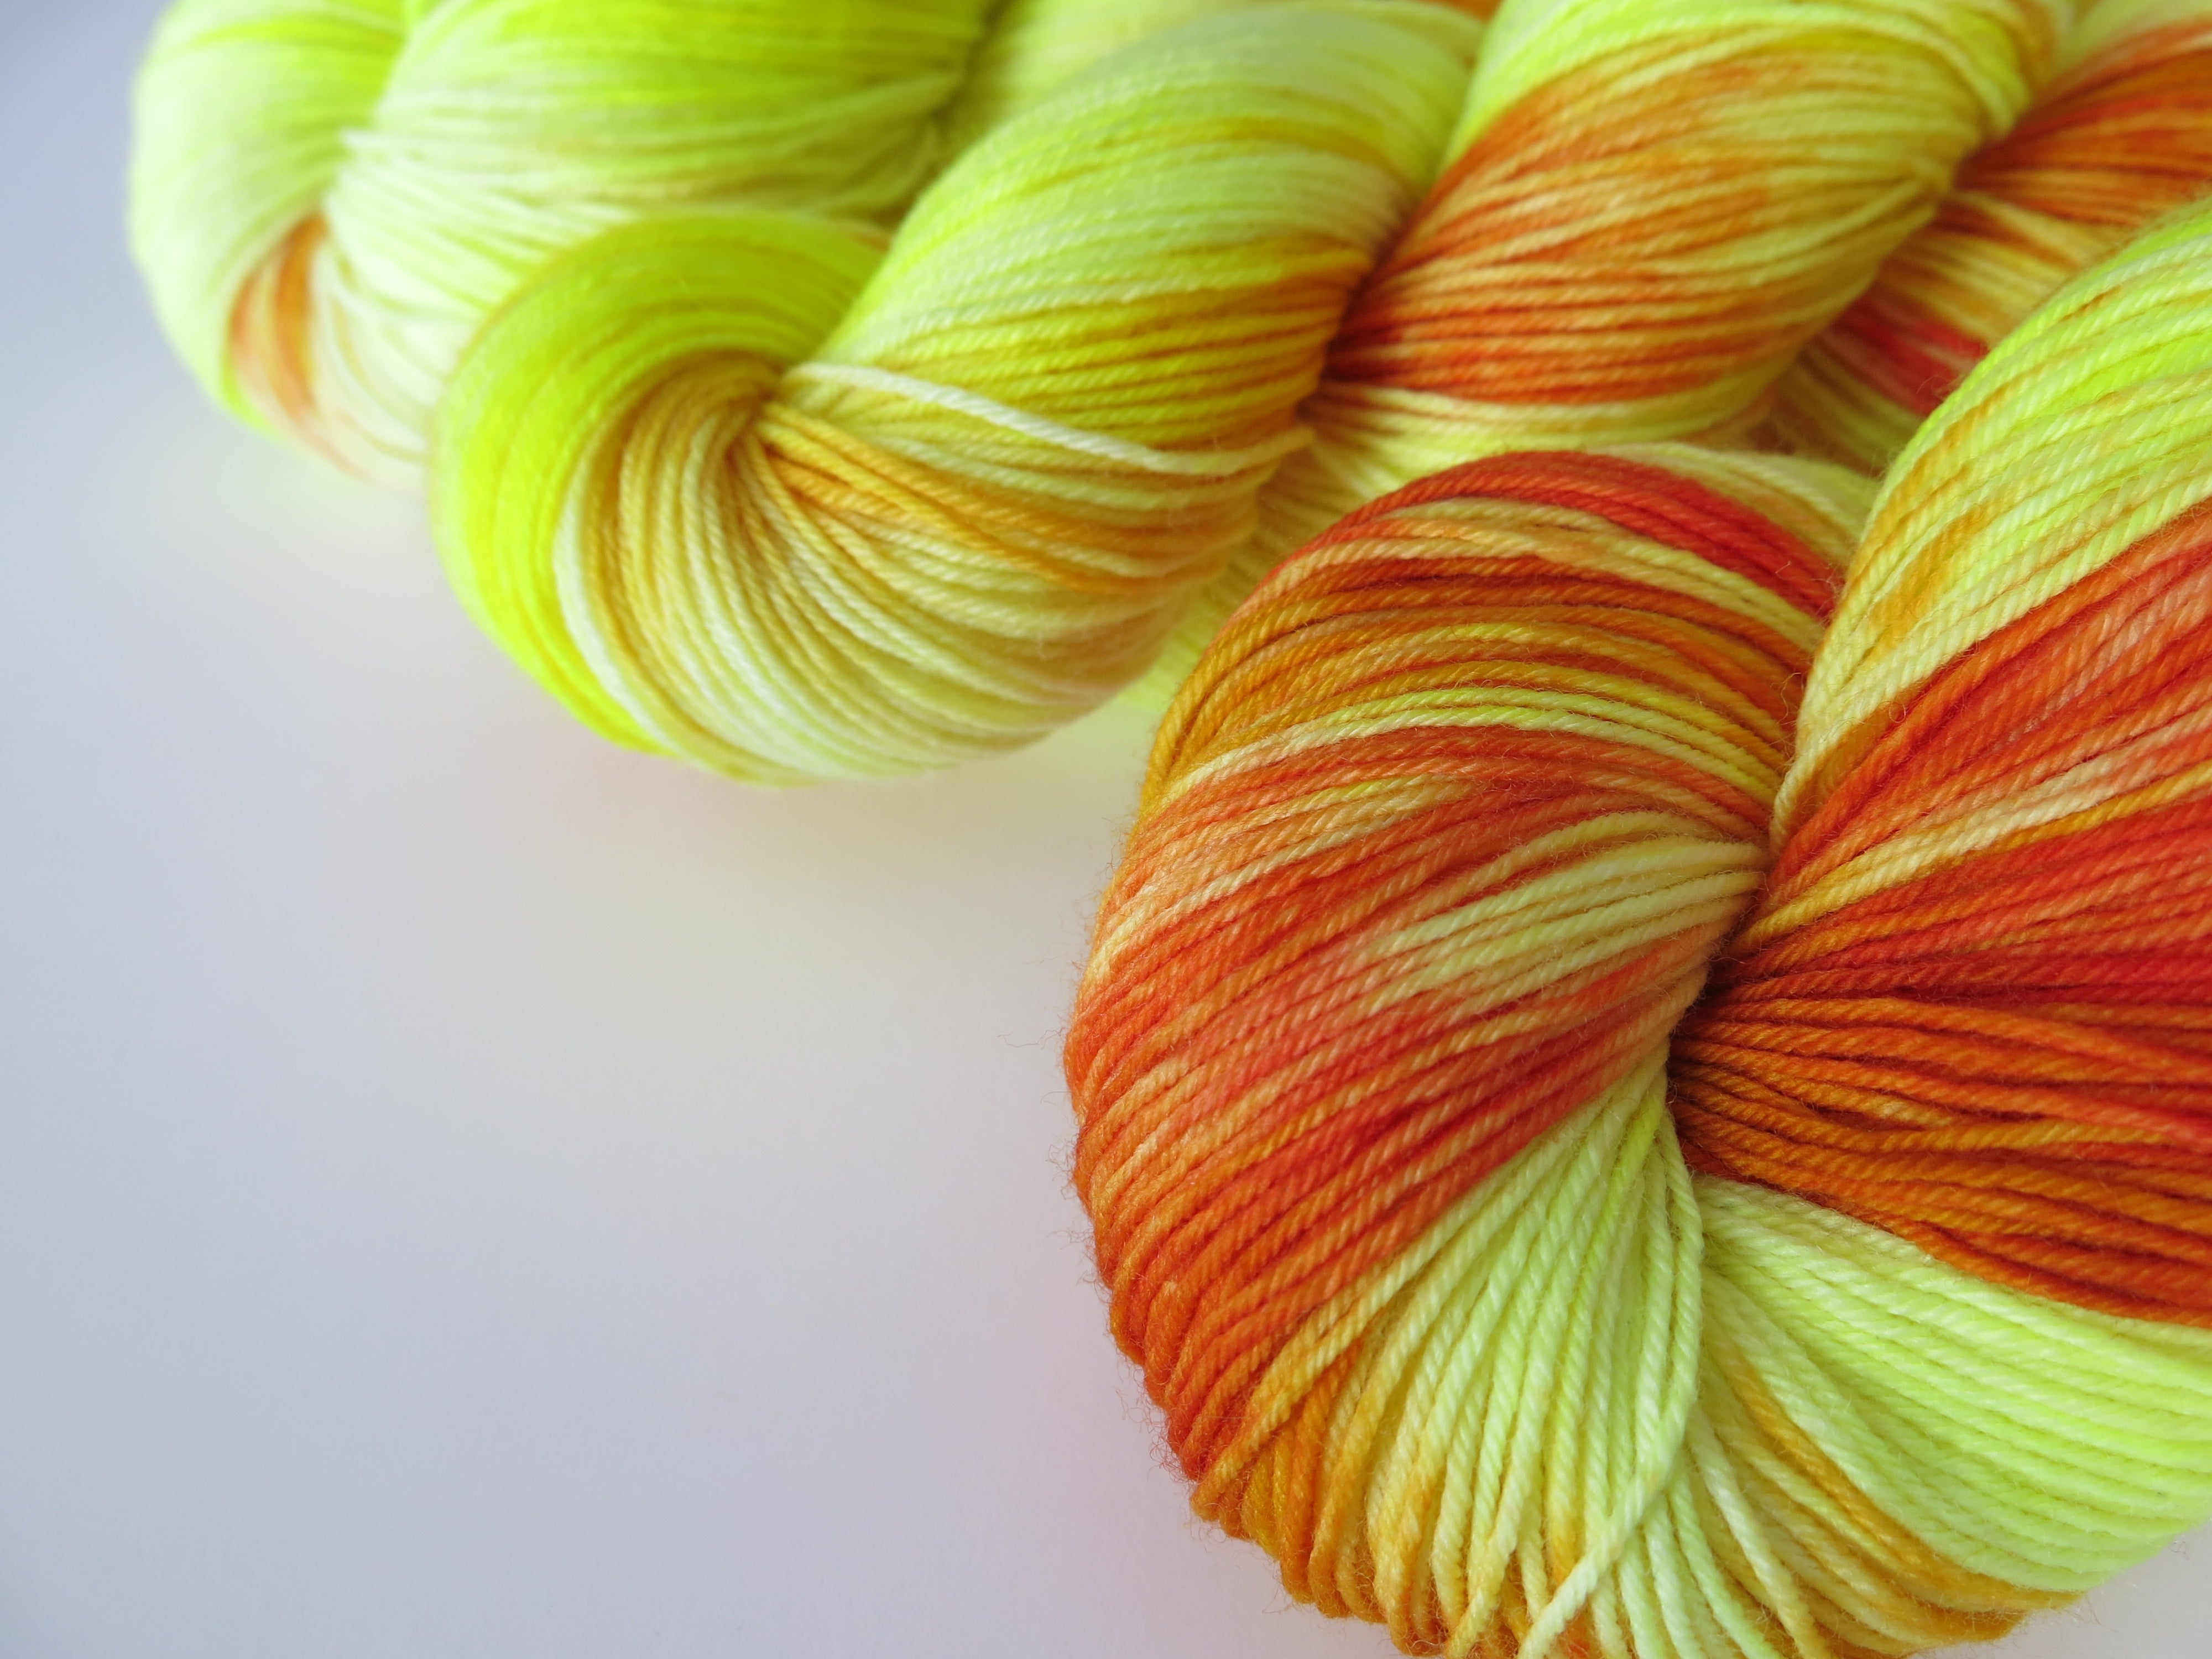 hand dyed merino and nylon sock yarn skeins in yellow and orange